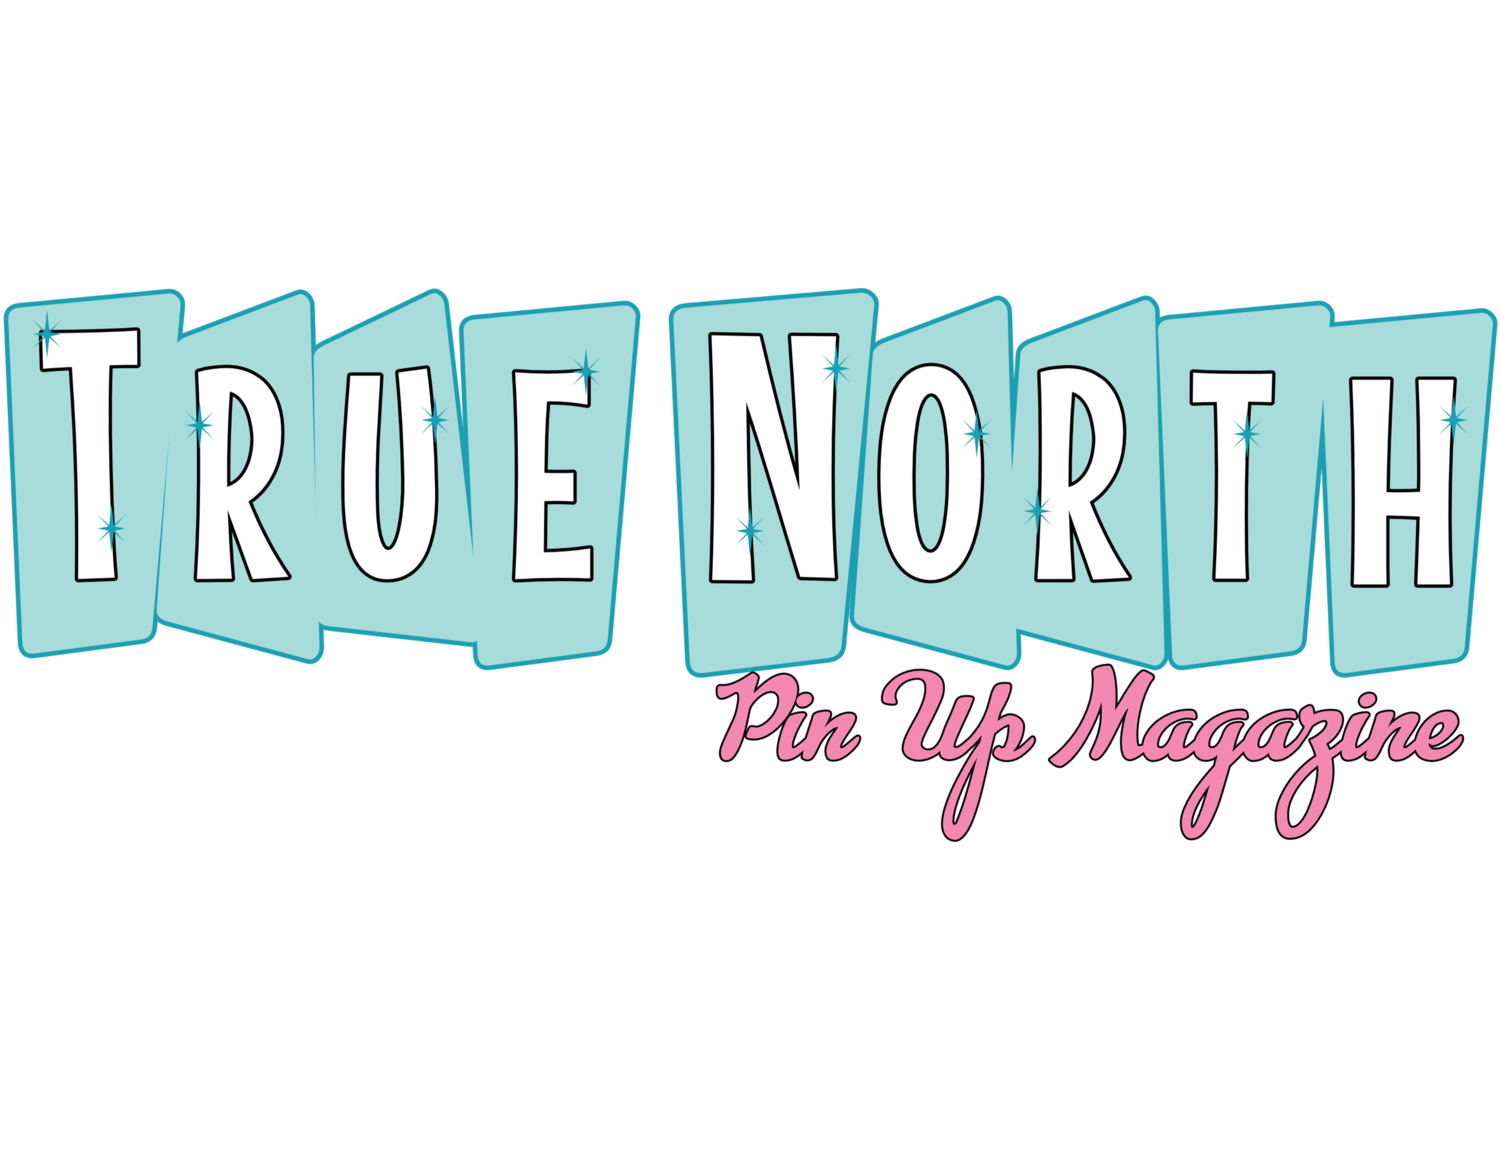 True North Pin Up Magazine